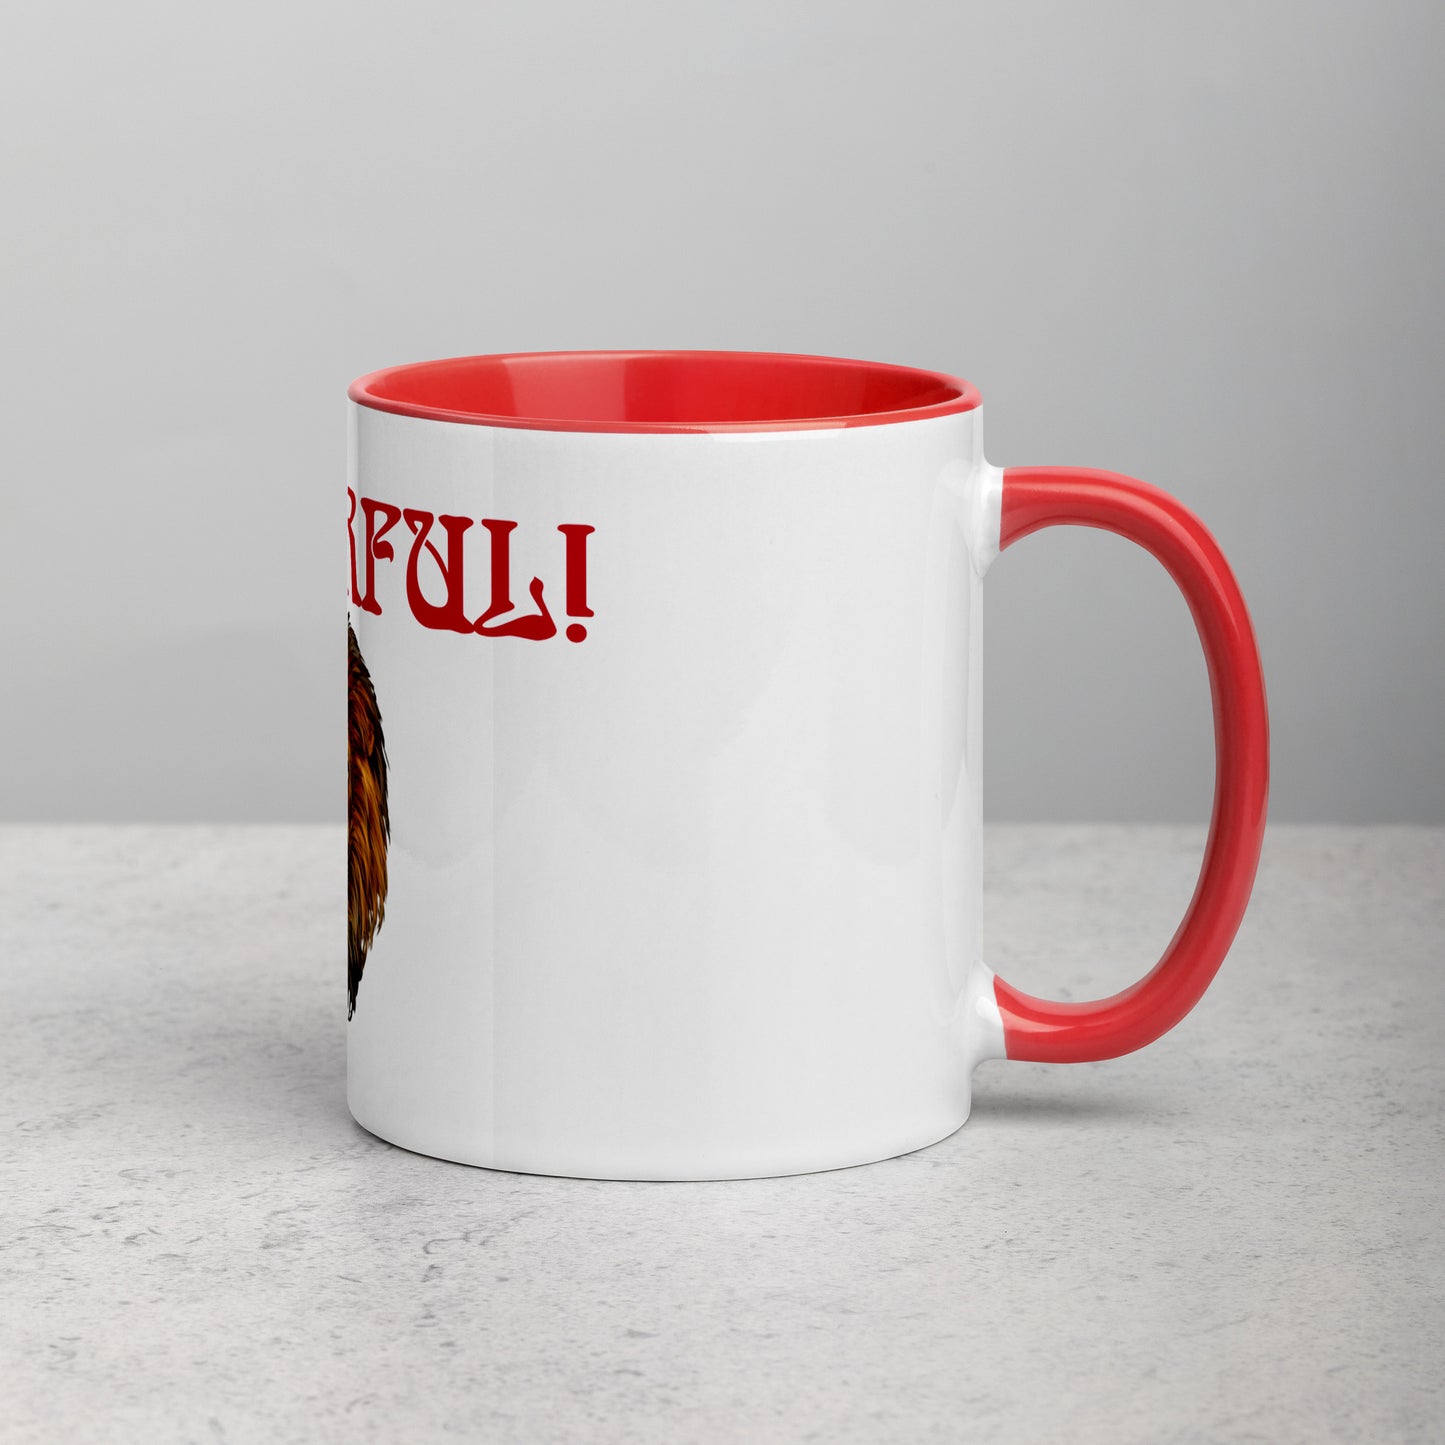 “POWERFUL!”Mug W/Color Inside W/Red Font